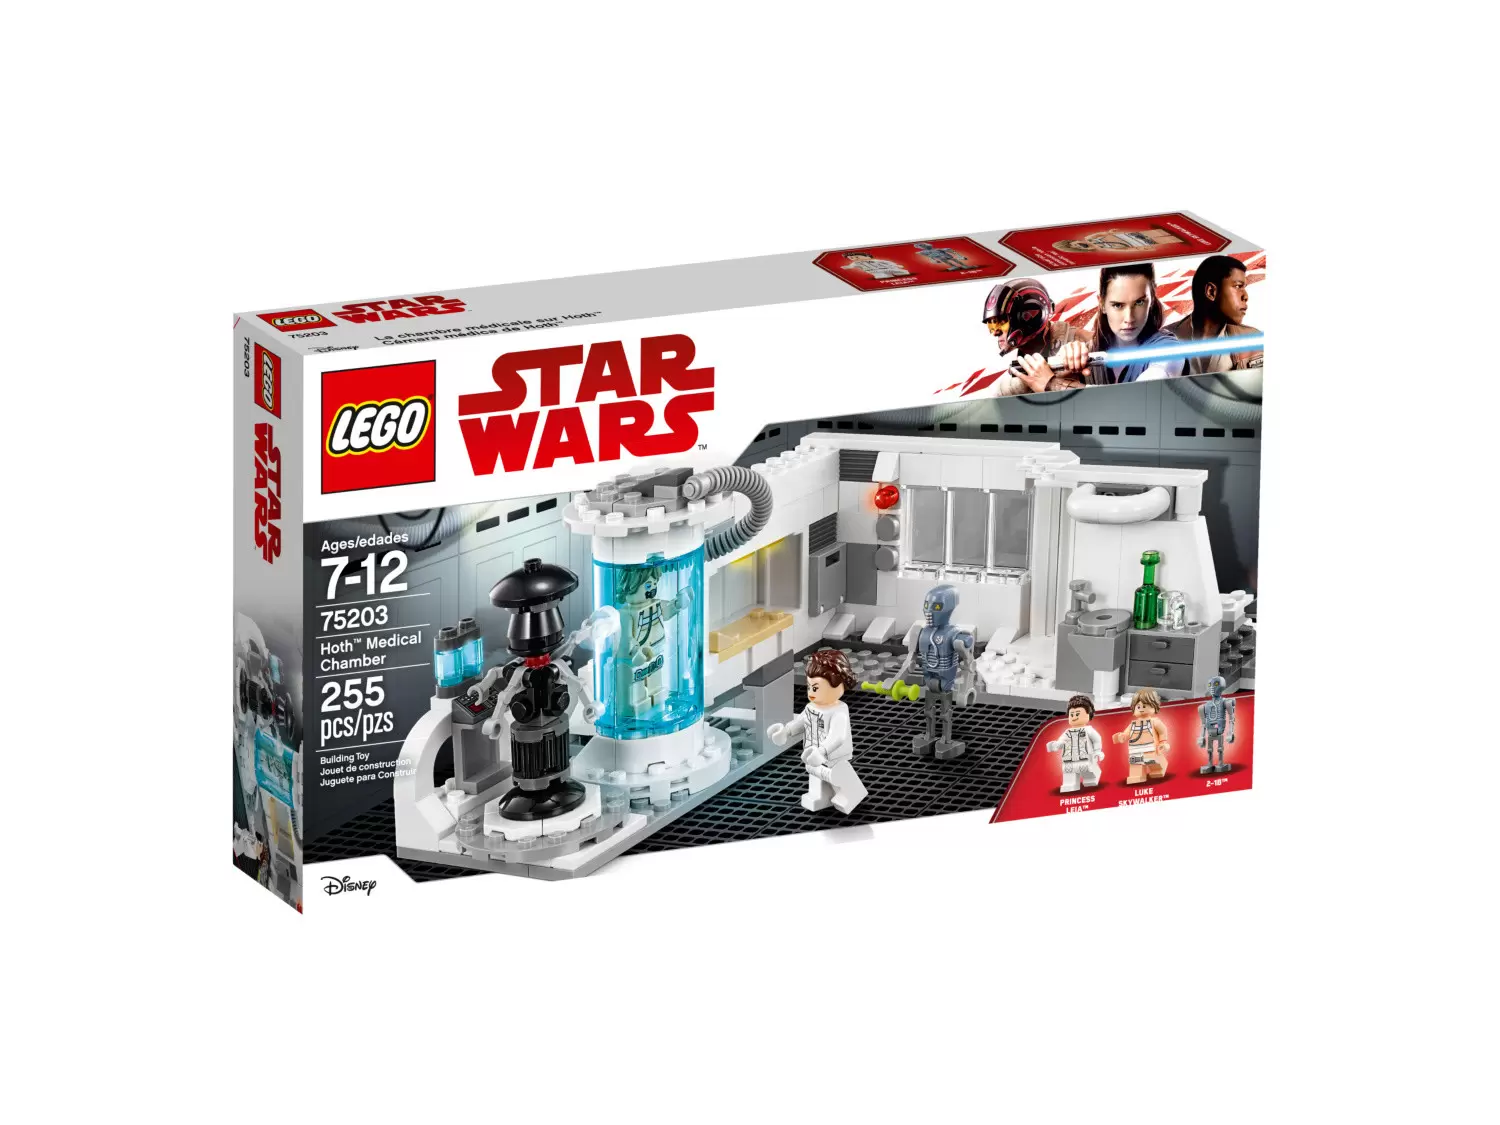 LEGO Star Wars - Hoth Medical Chamber